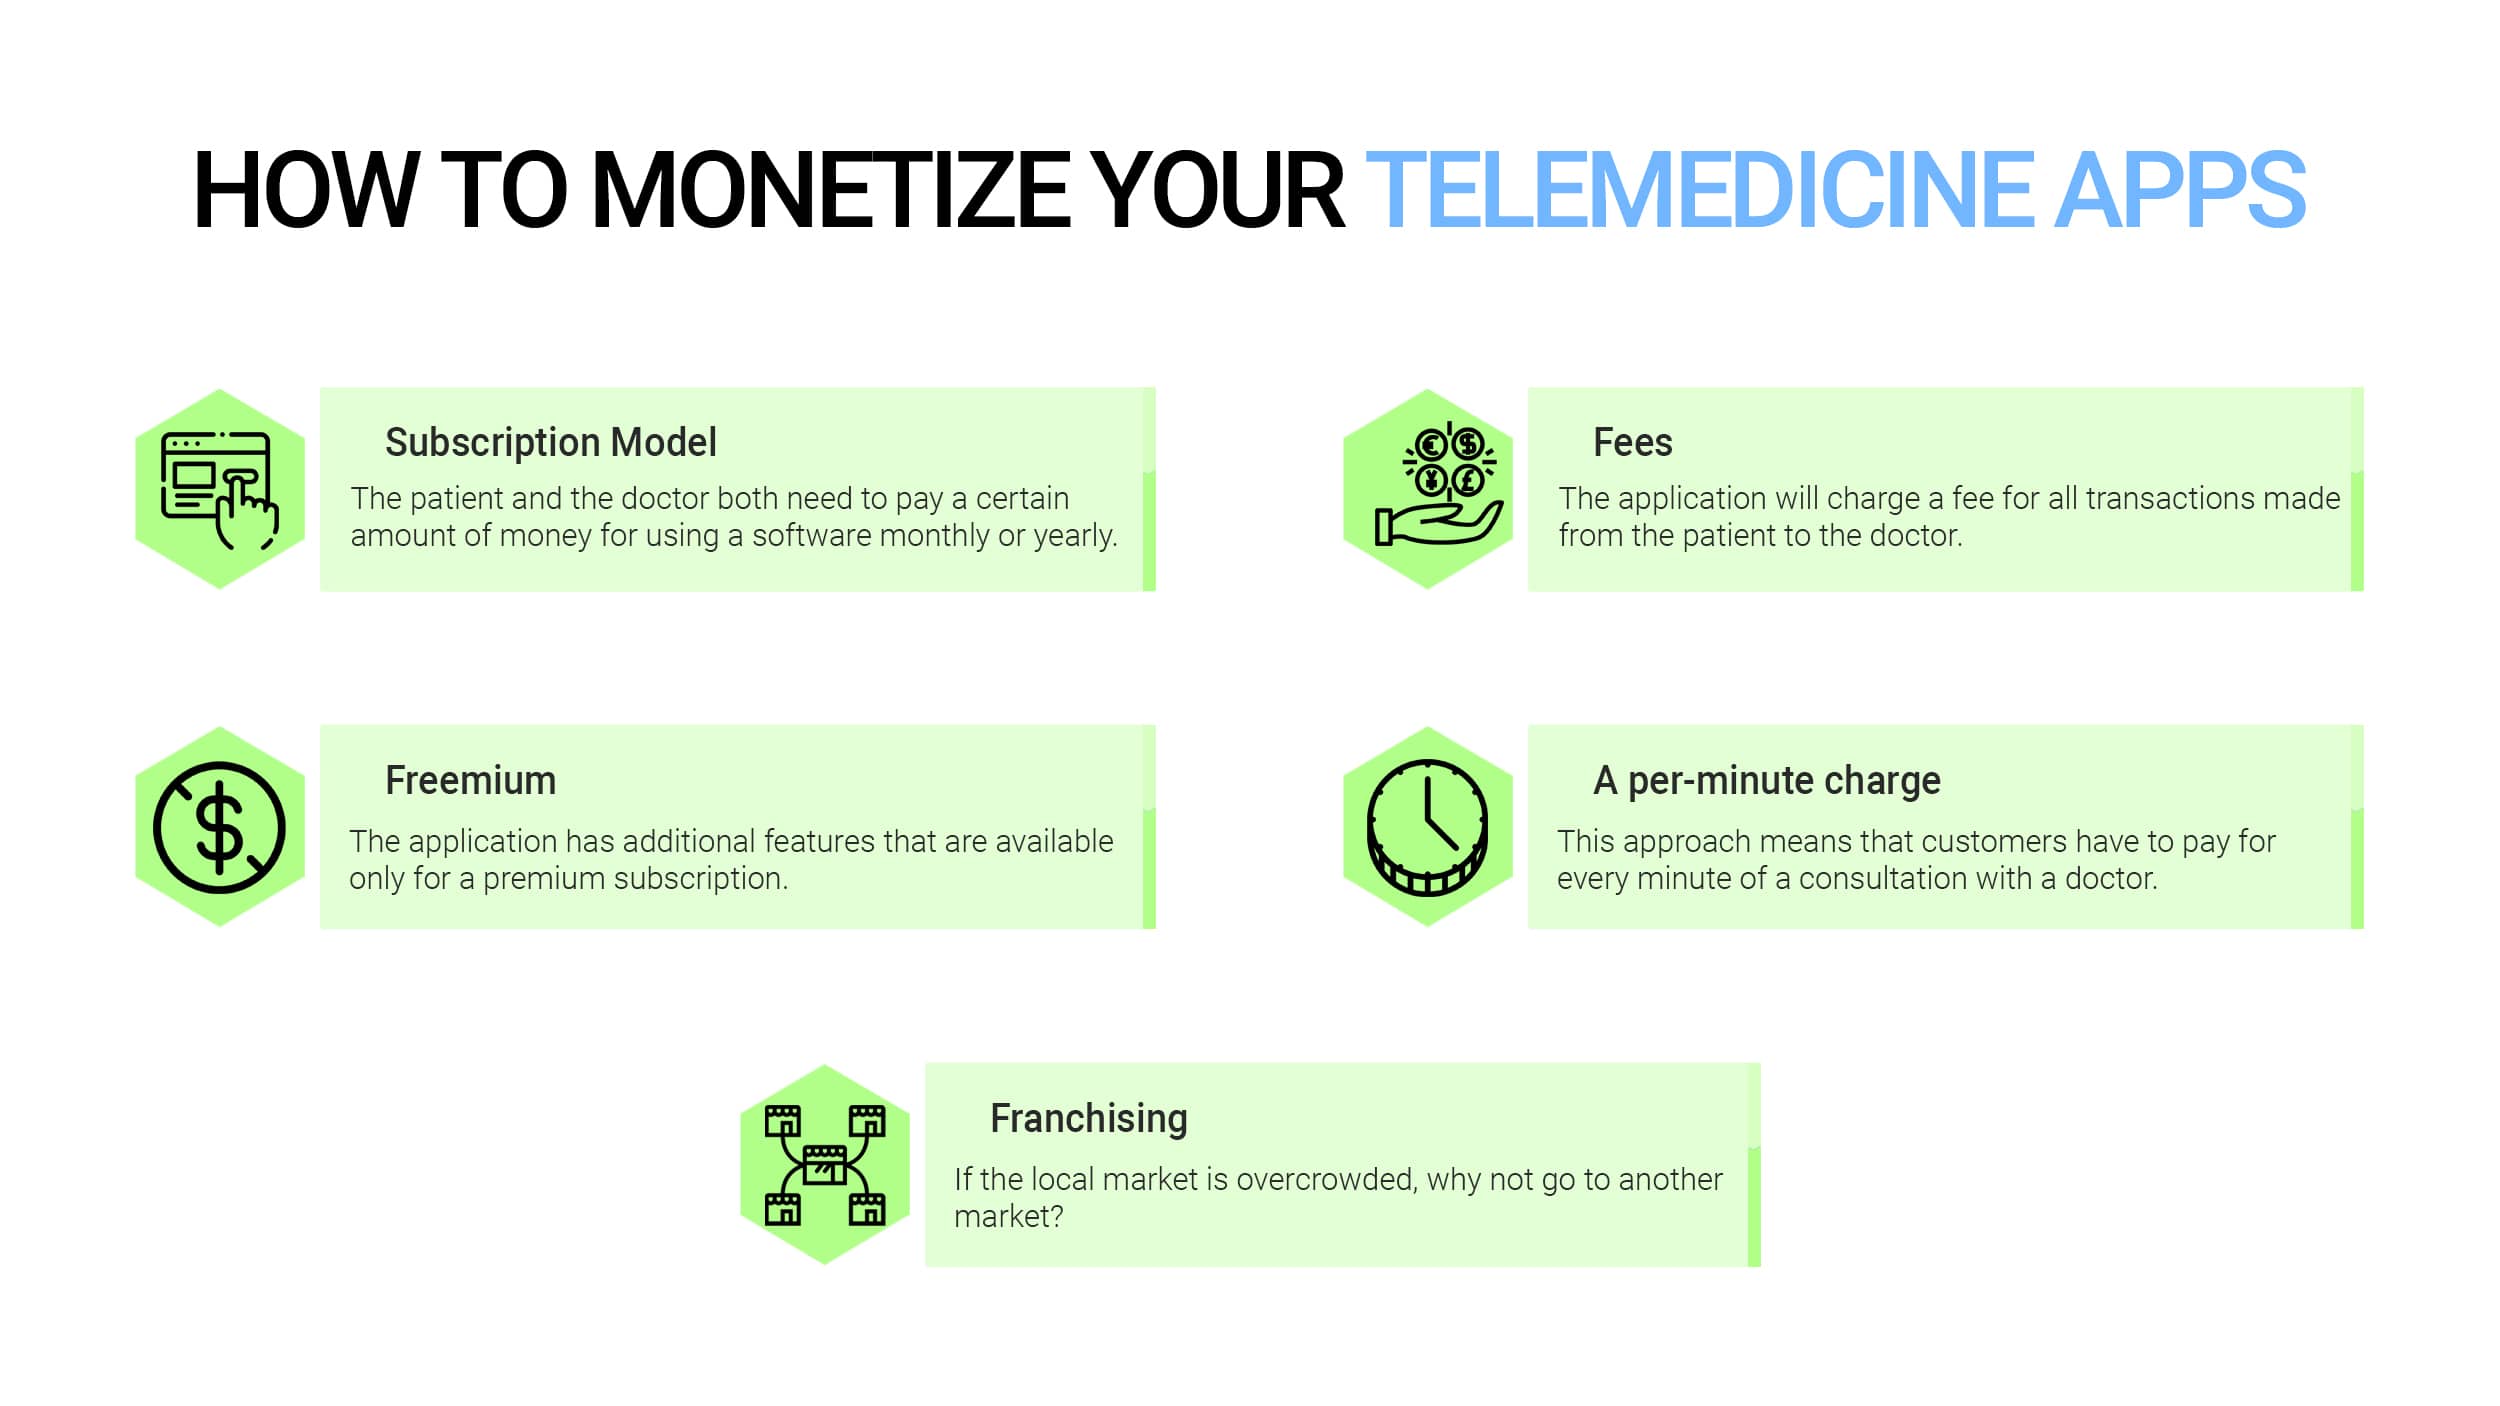 Monetization strategies for telemedicine apps